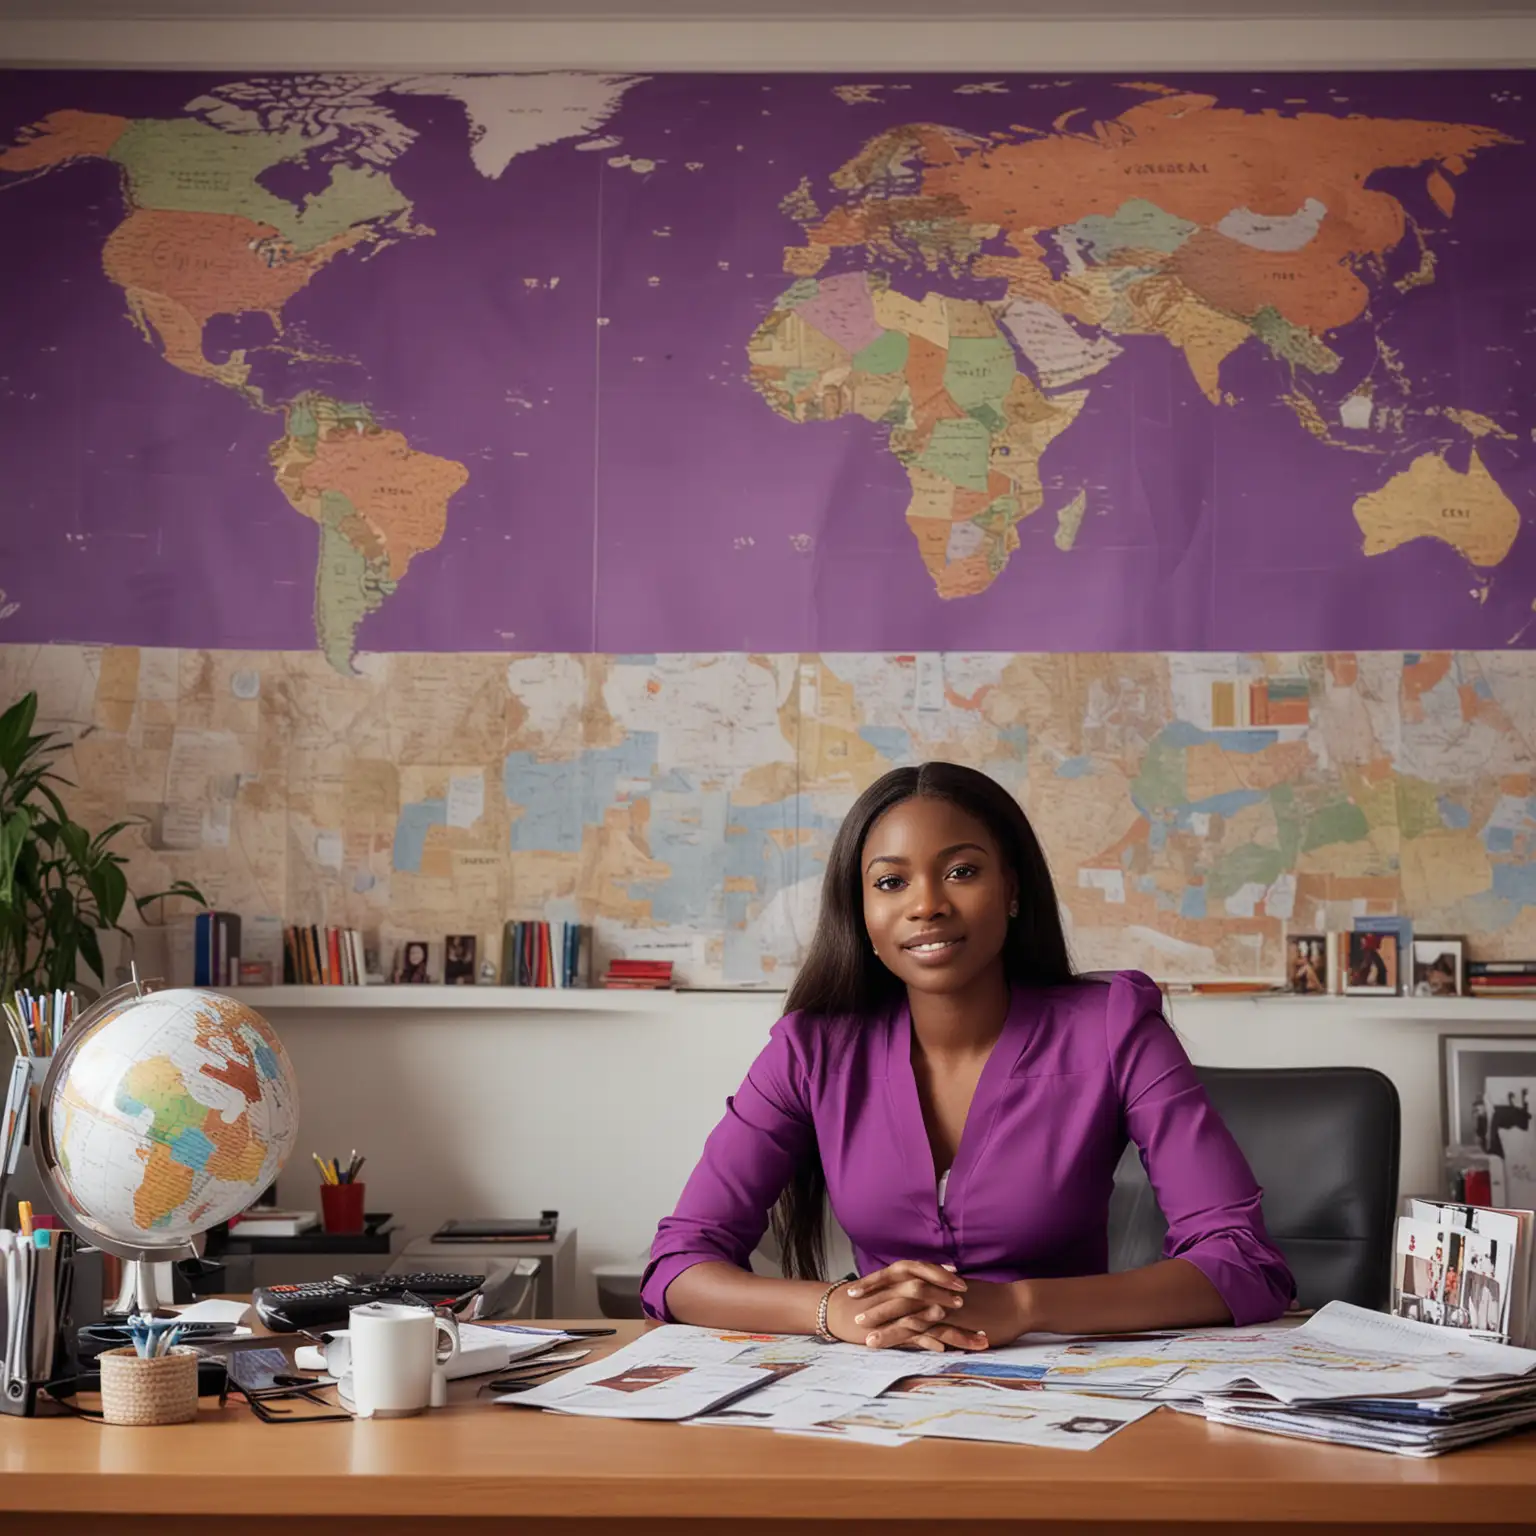 Professional Nigerian Woman in Global Office Setting